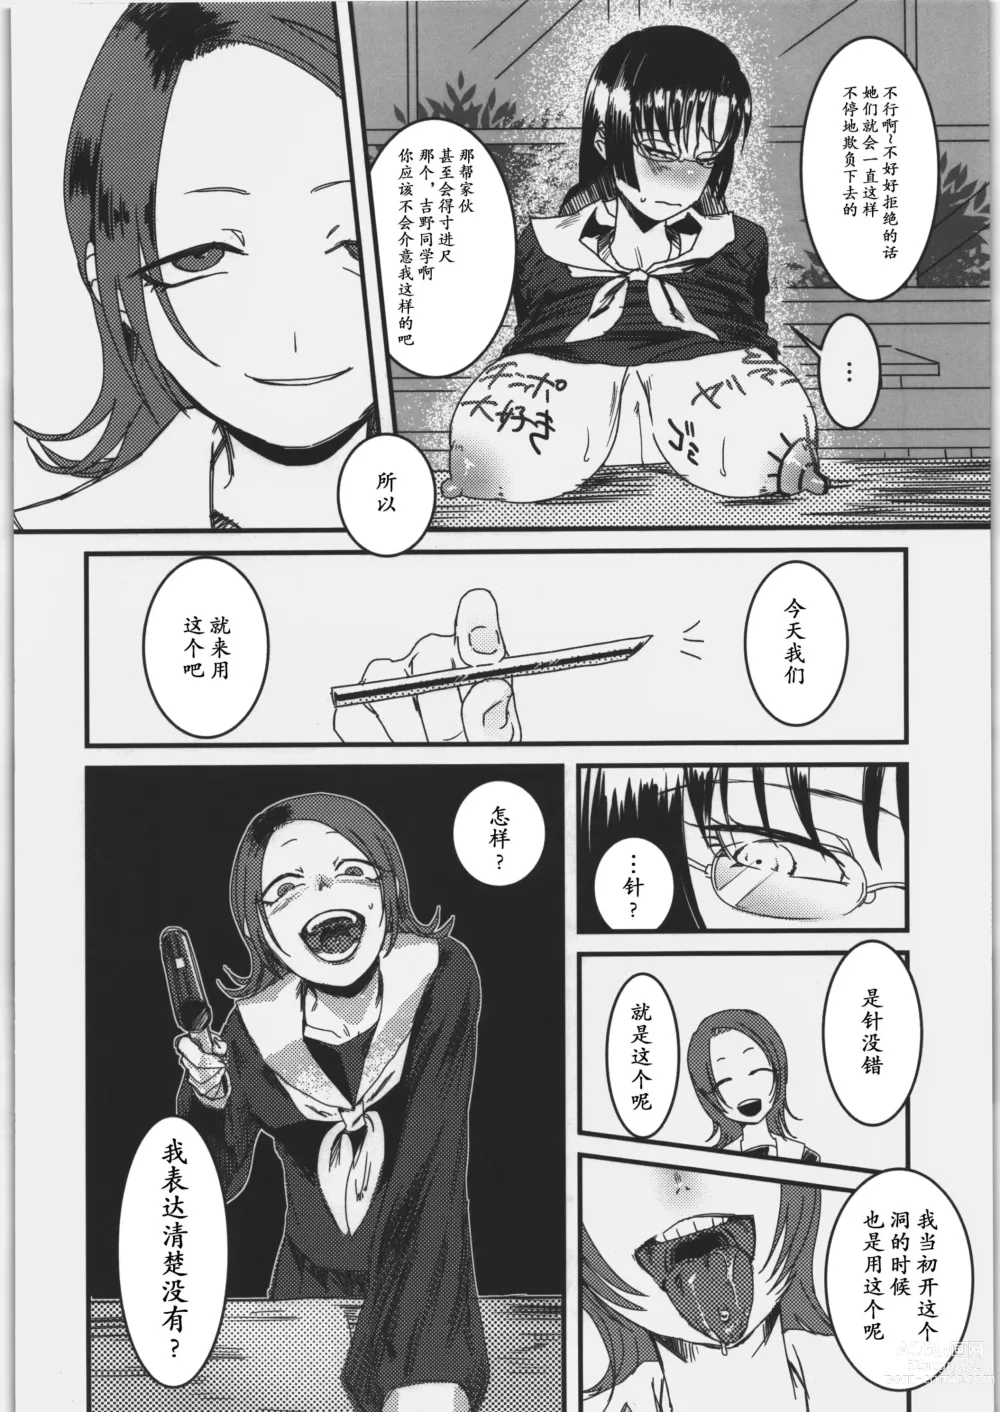 Page 6 of doujinshi Riyuu no Nai Asobi